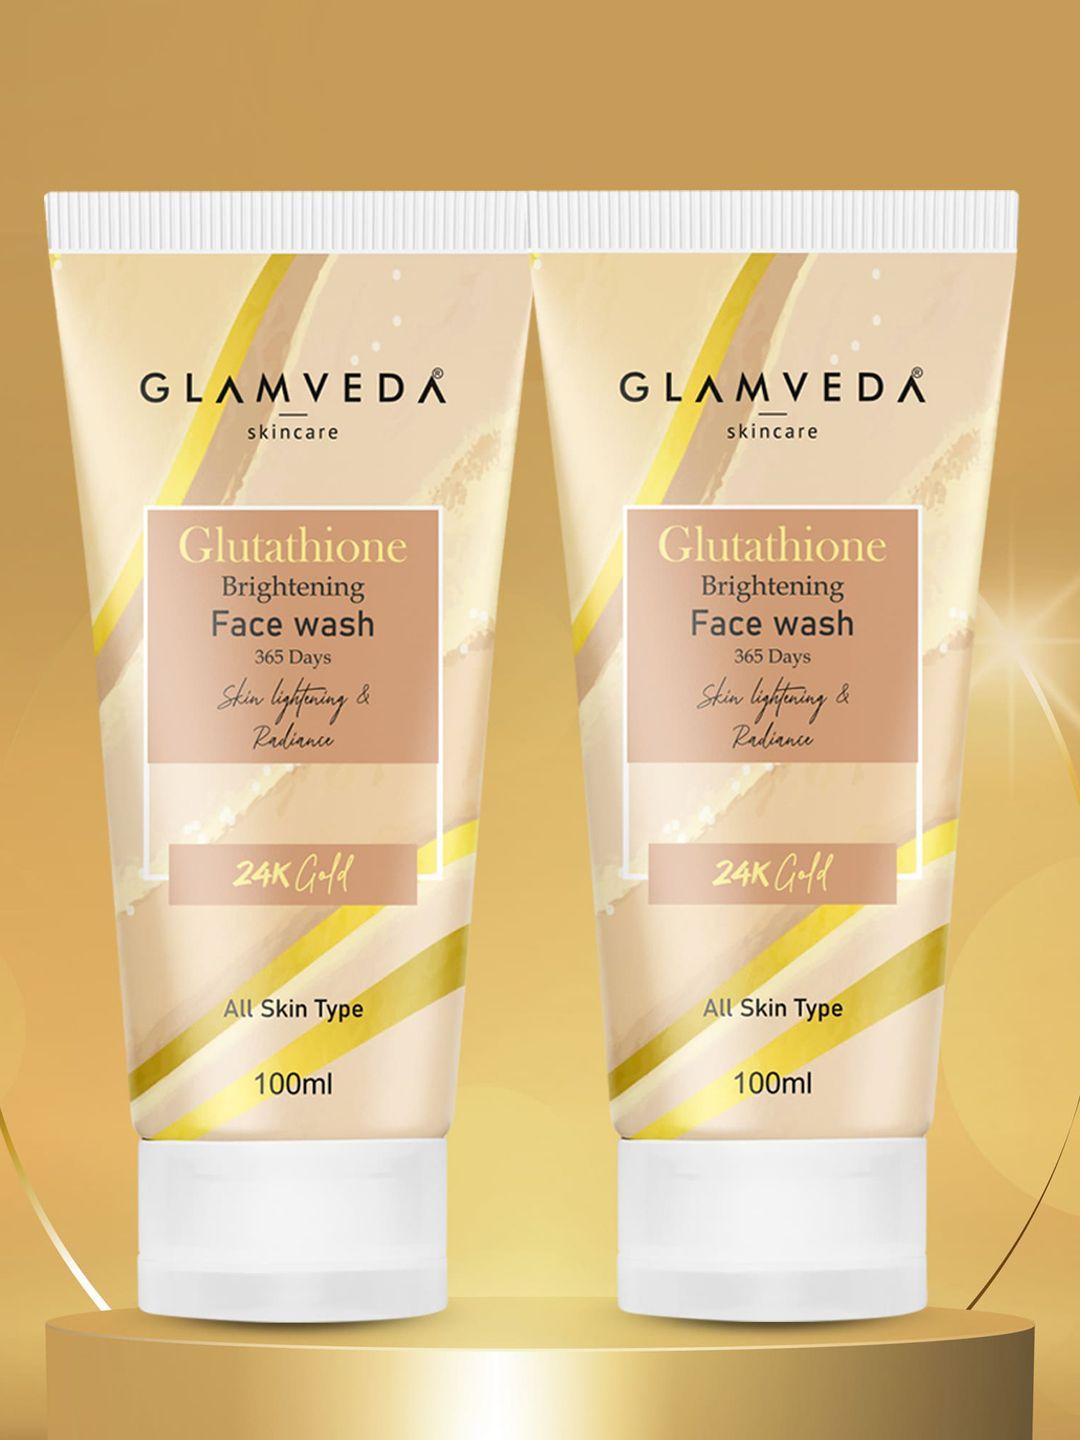 glamveda set of 2 glutathione 24k gold face wash - 100 ml each